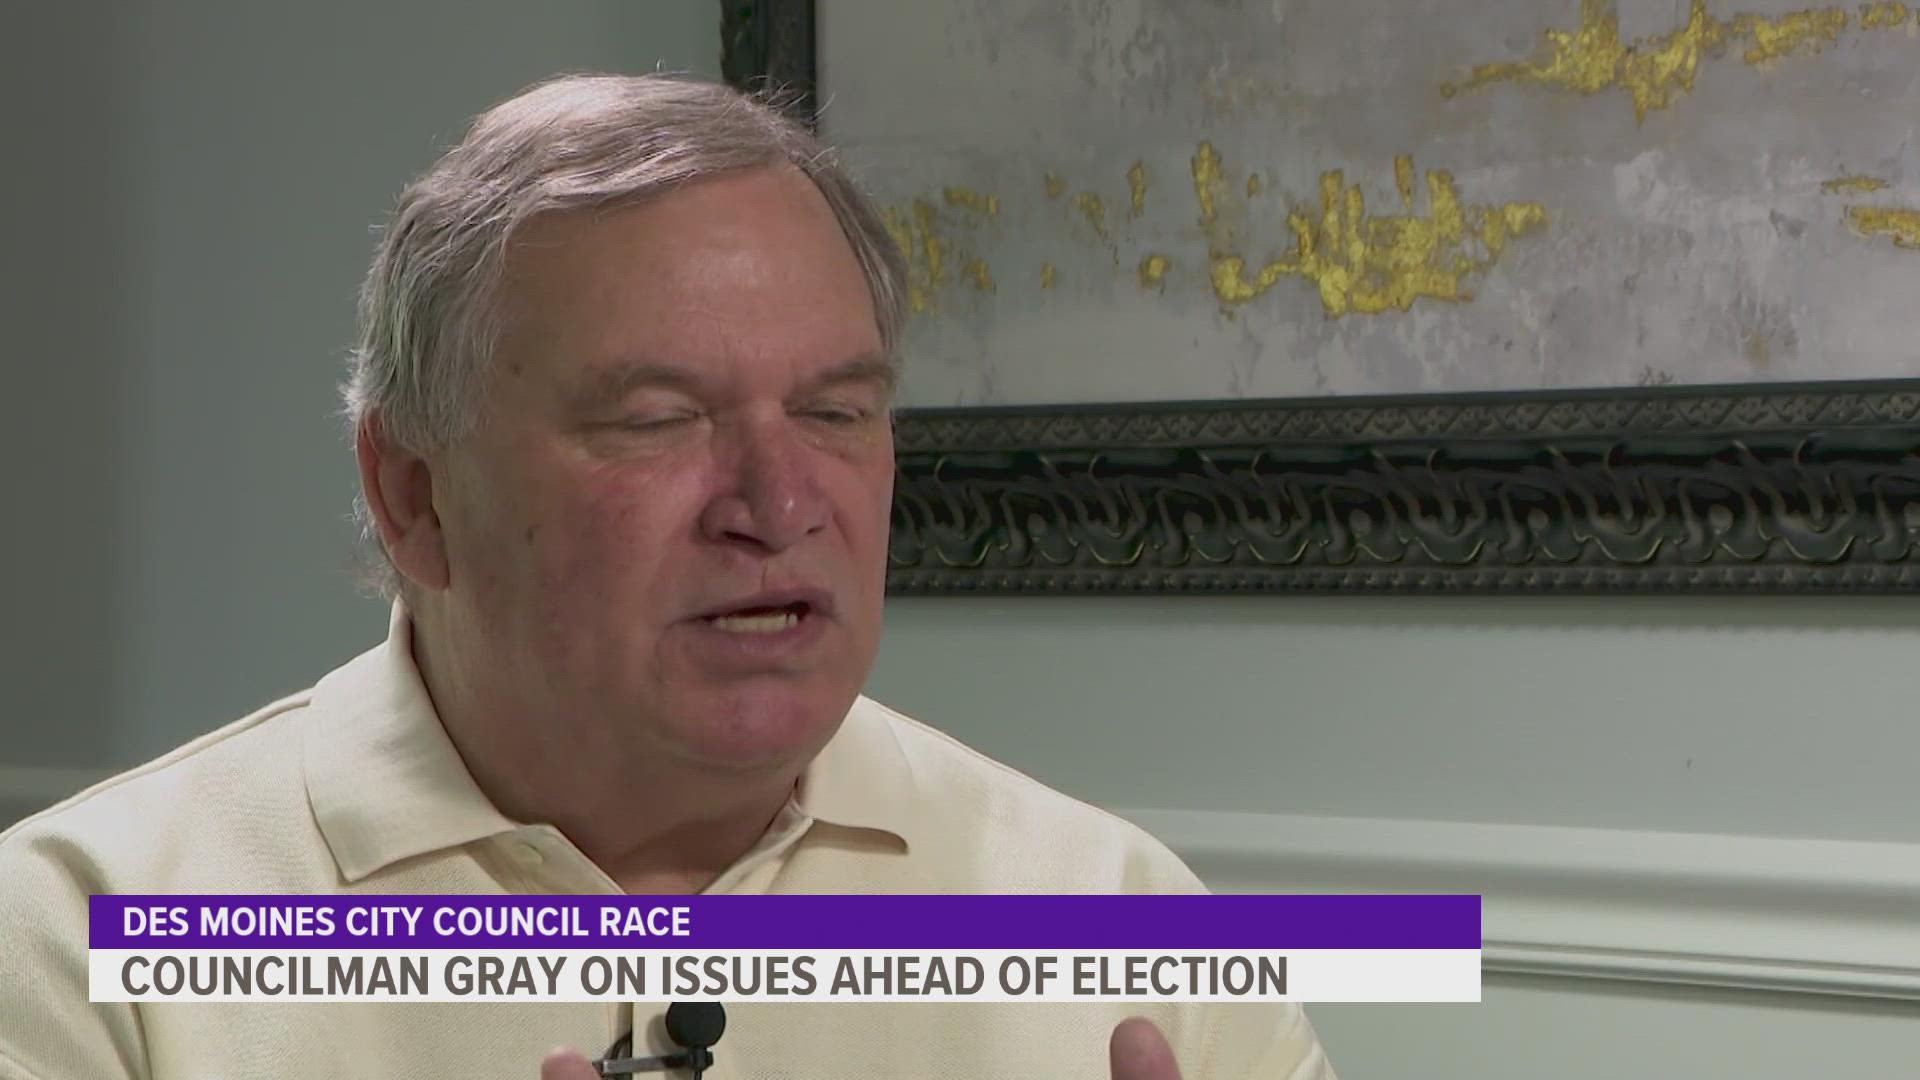 Bill Gray has held the Ward 1 seat since 2014.